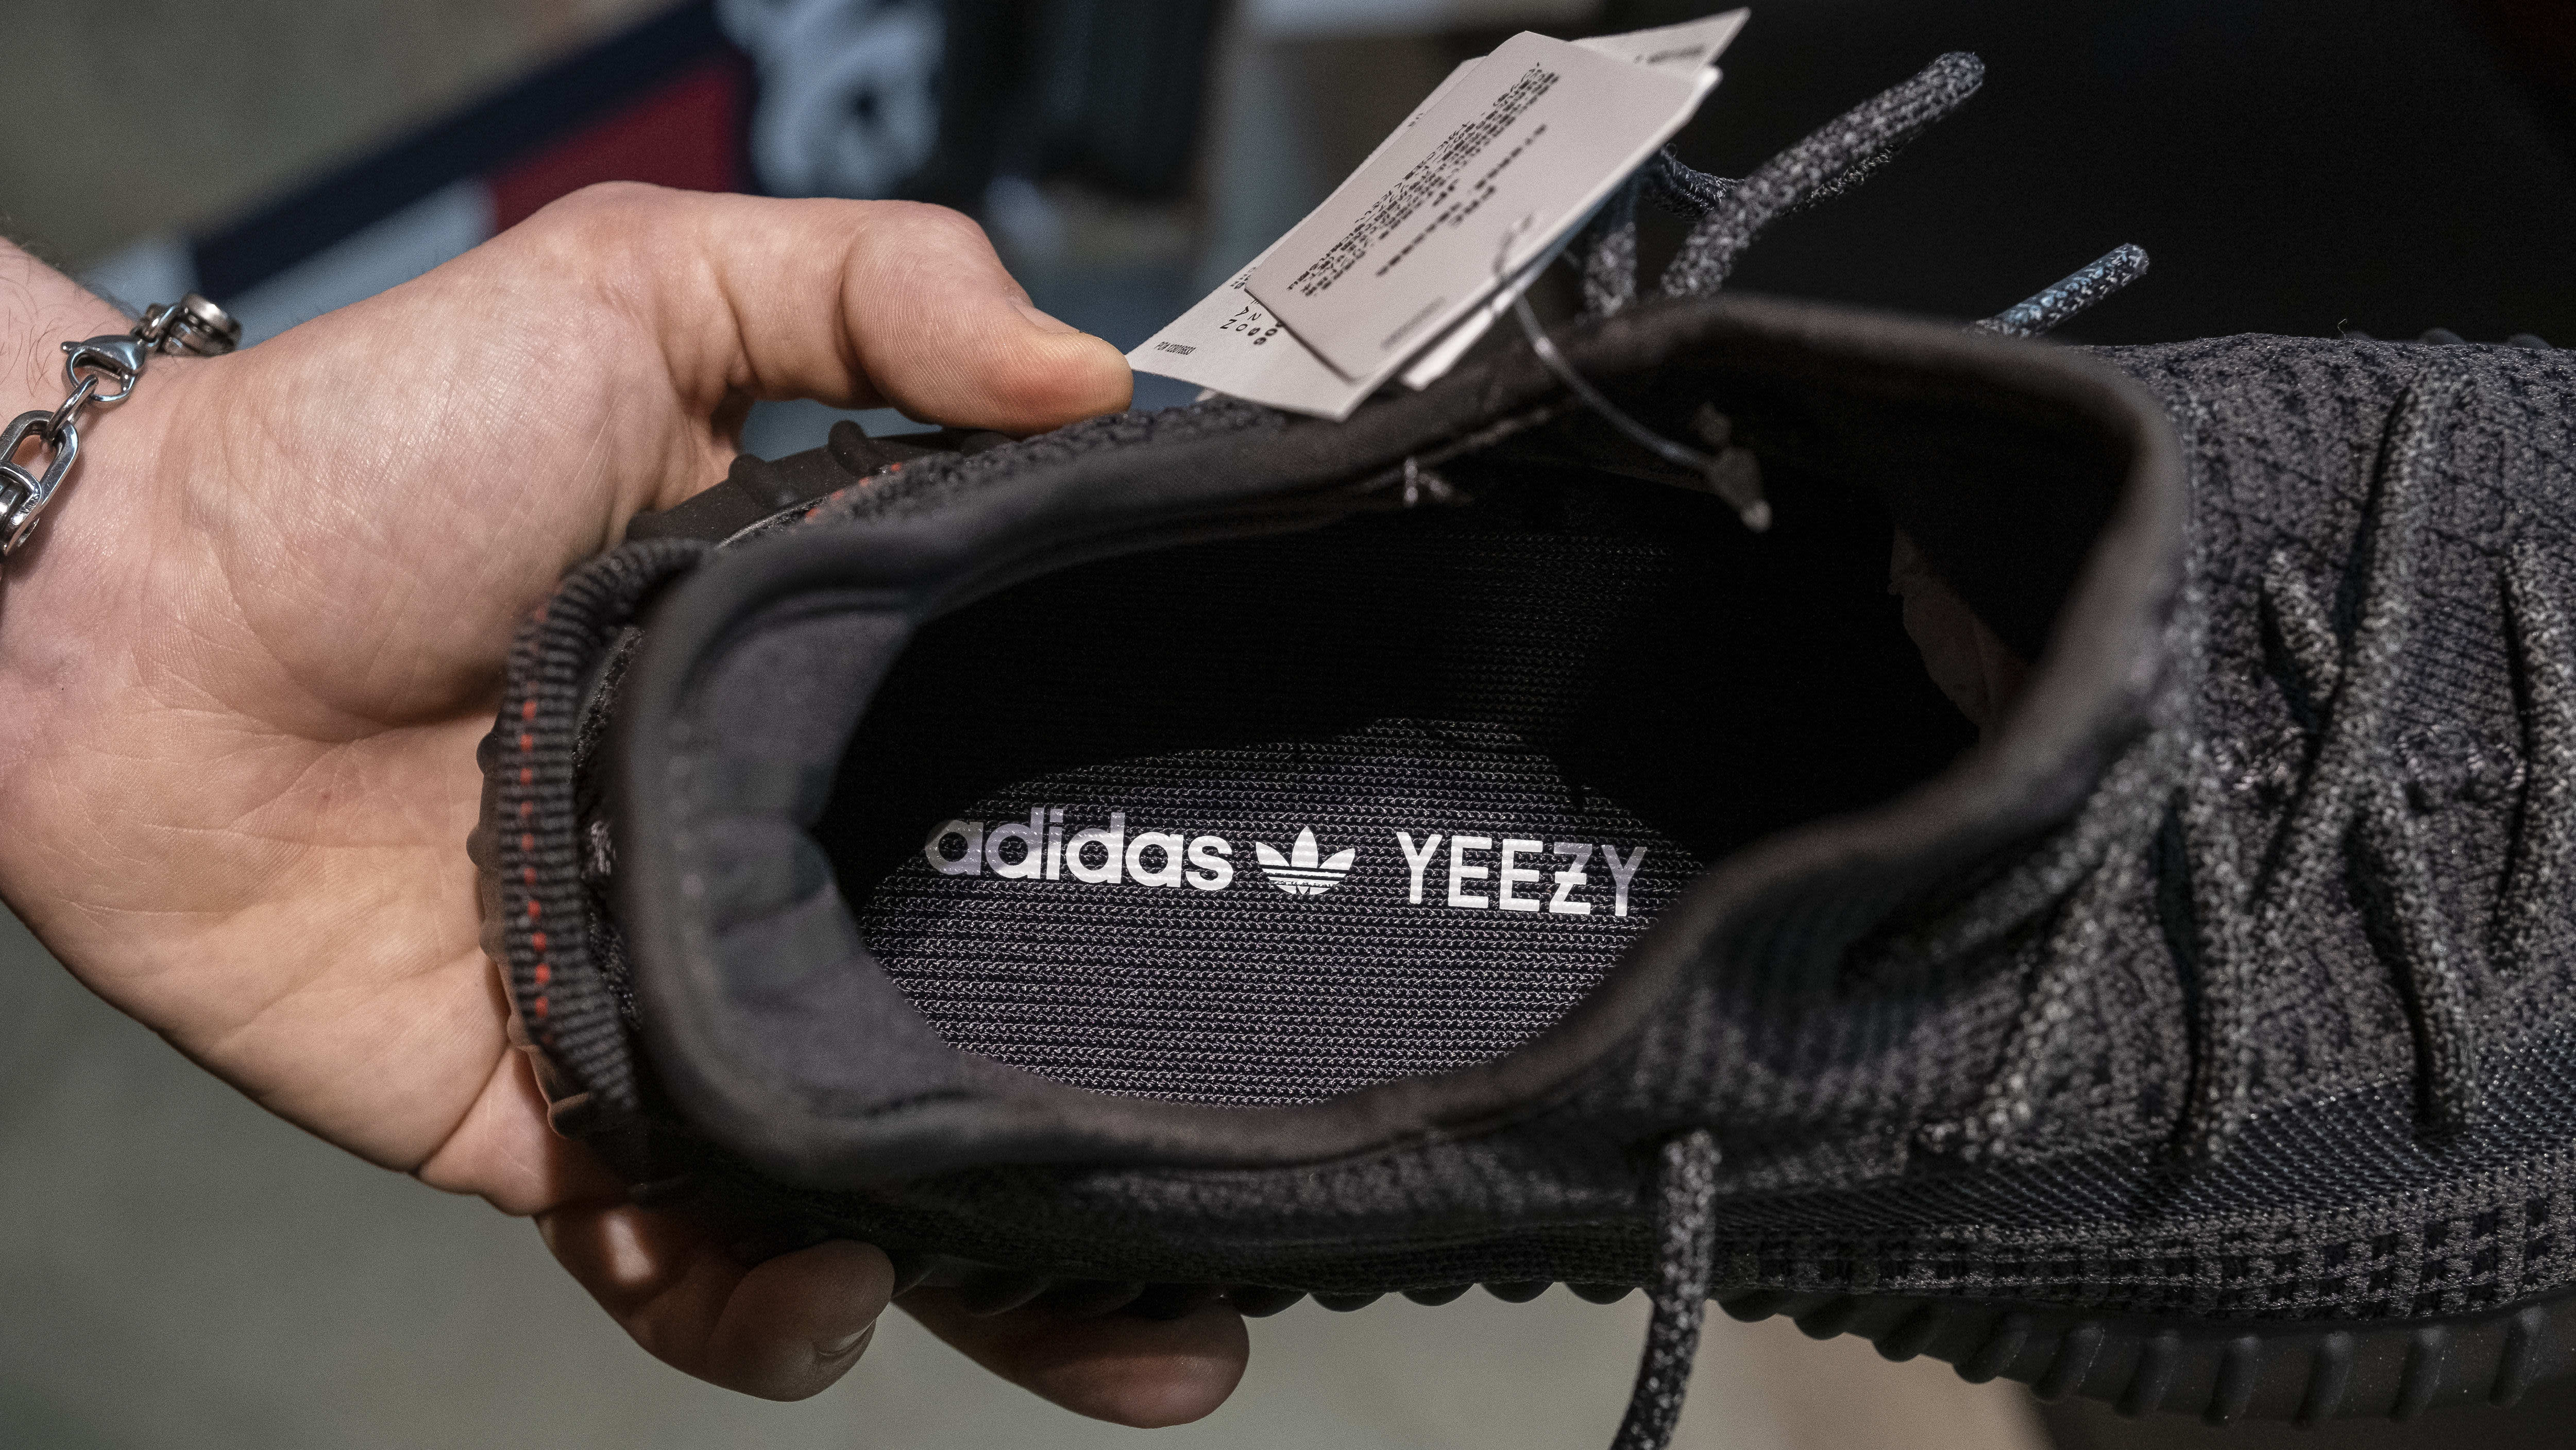 Adidas's Sale of Yeezy Sneakers Brings in 400 Million Euros - The